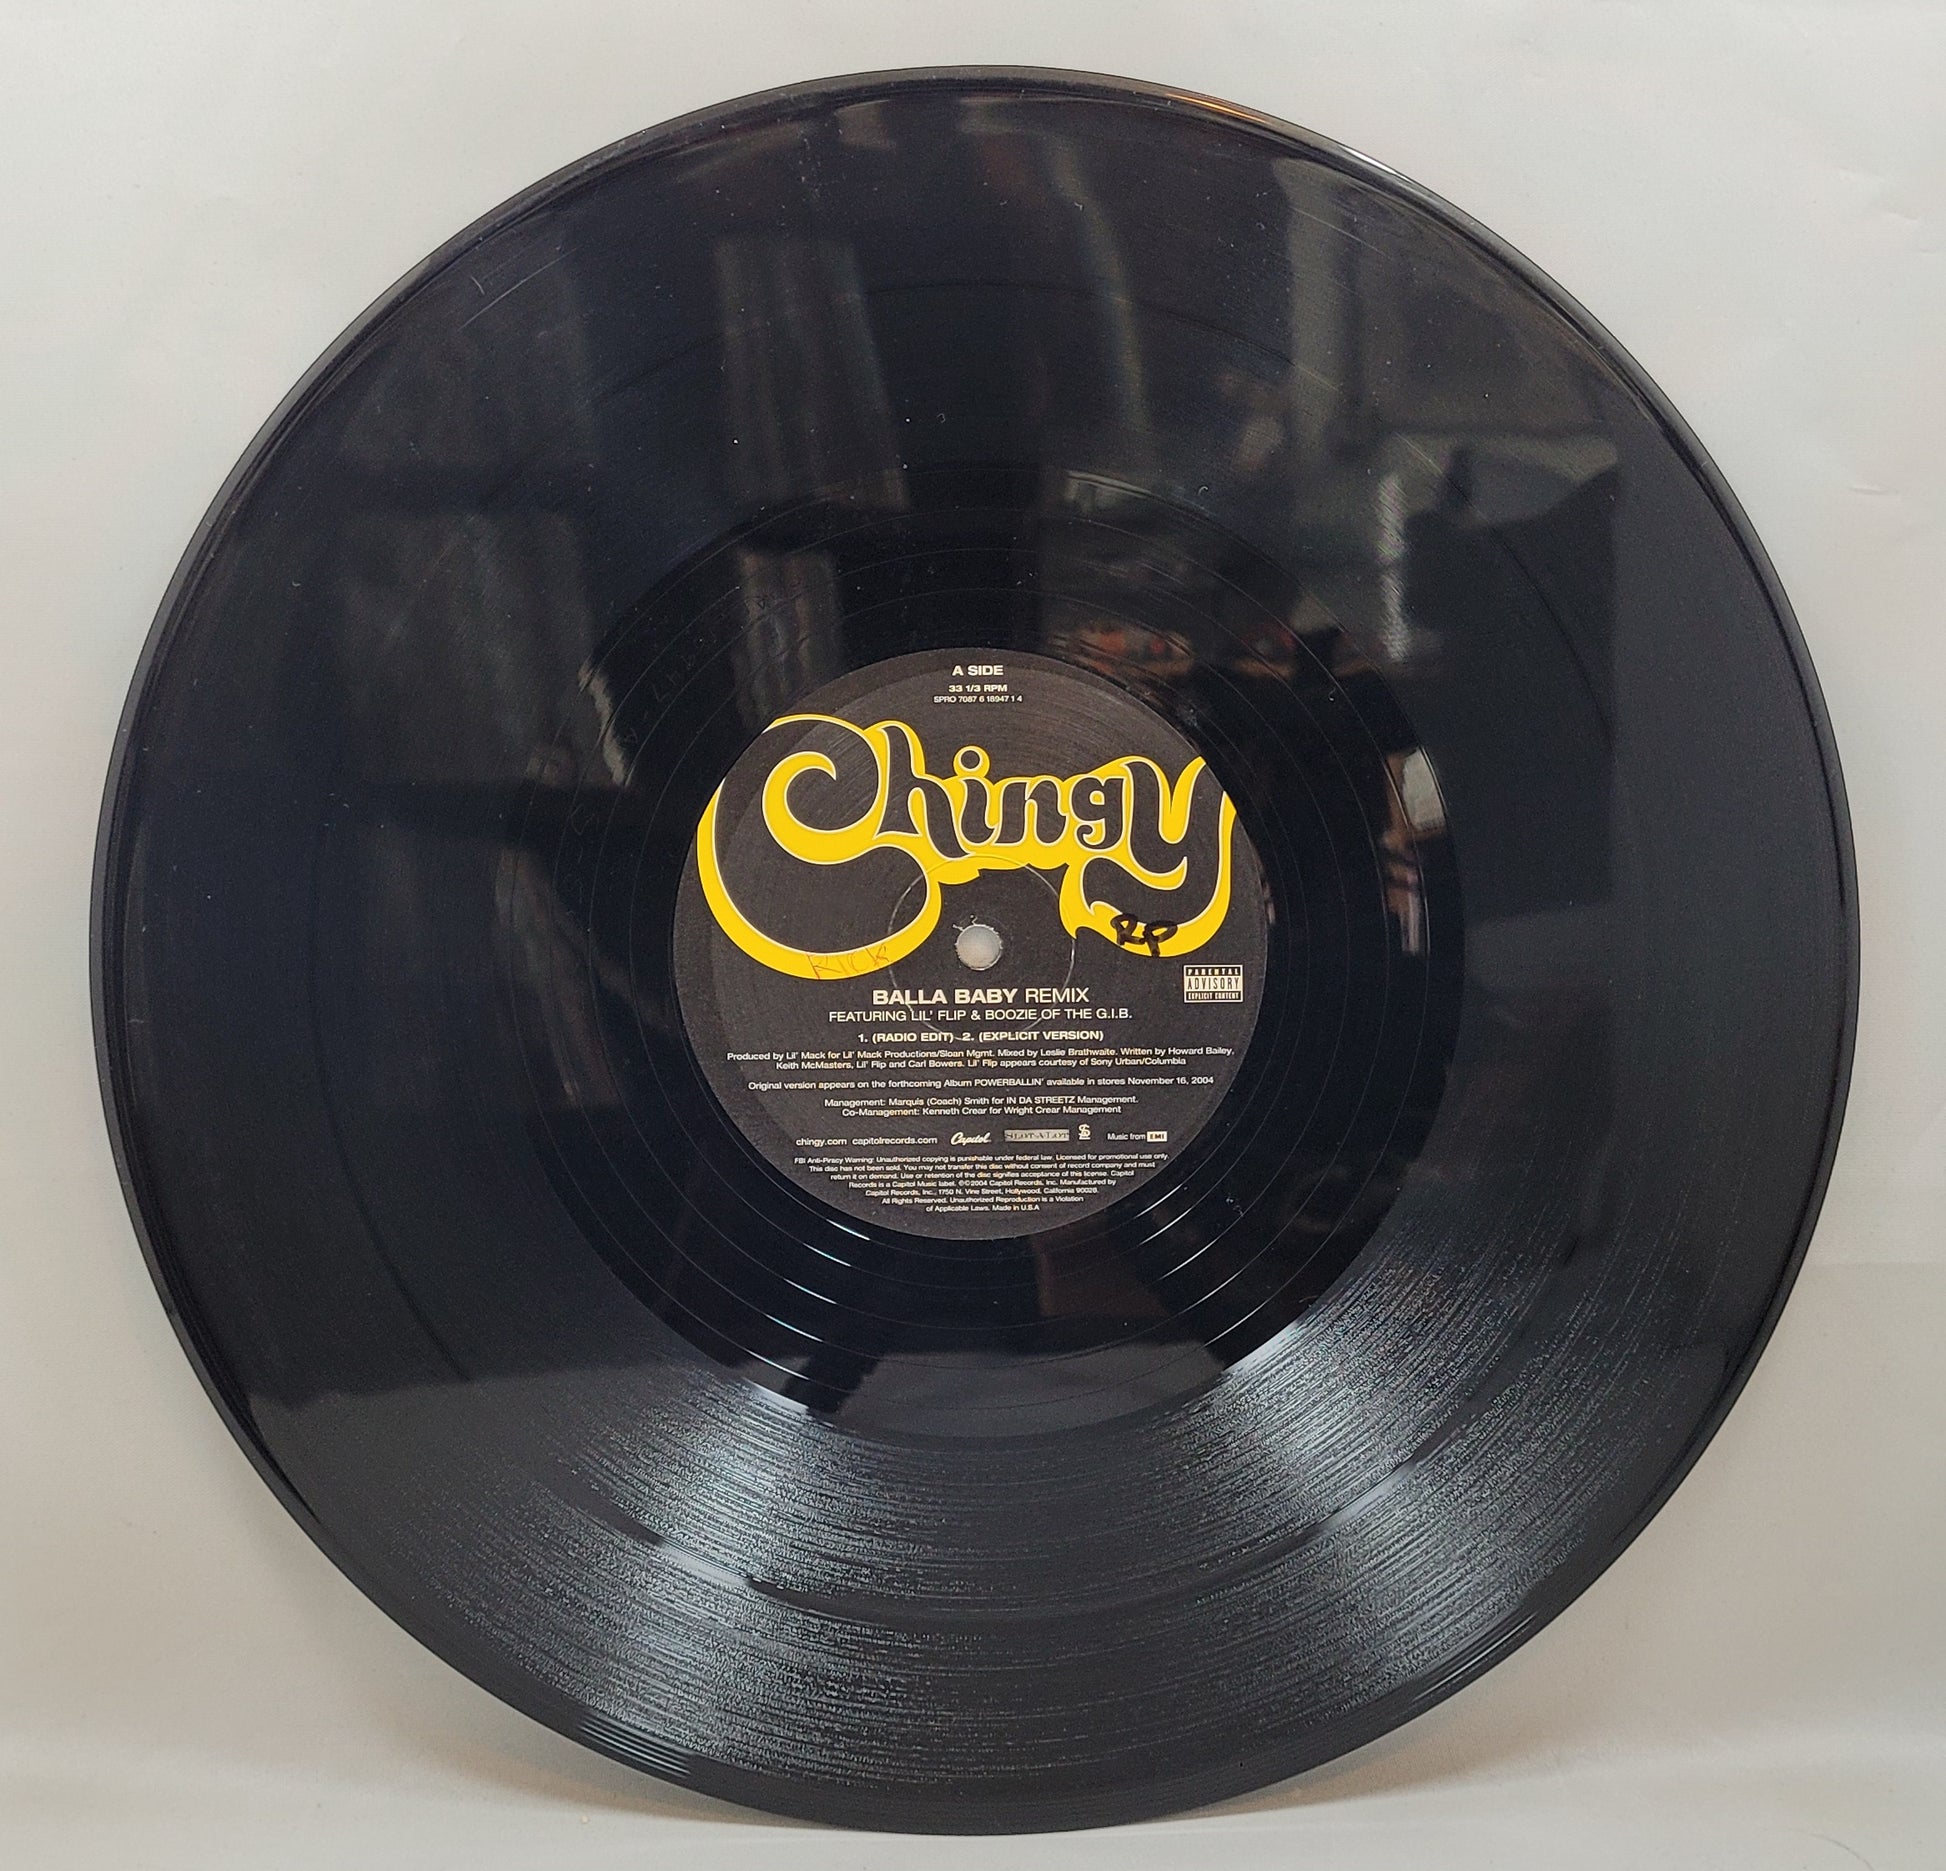 Chingy - Balla Baby (Remix) [2004 Promo] [Used Vinyl Record 12" Single]